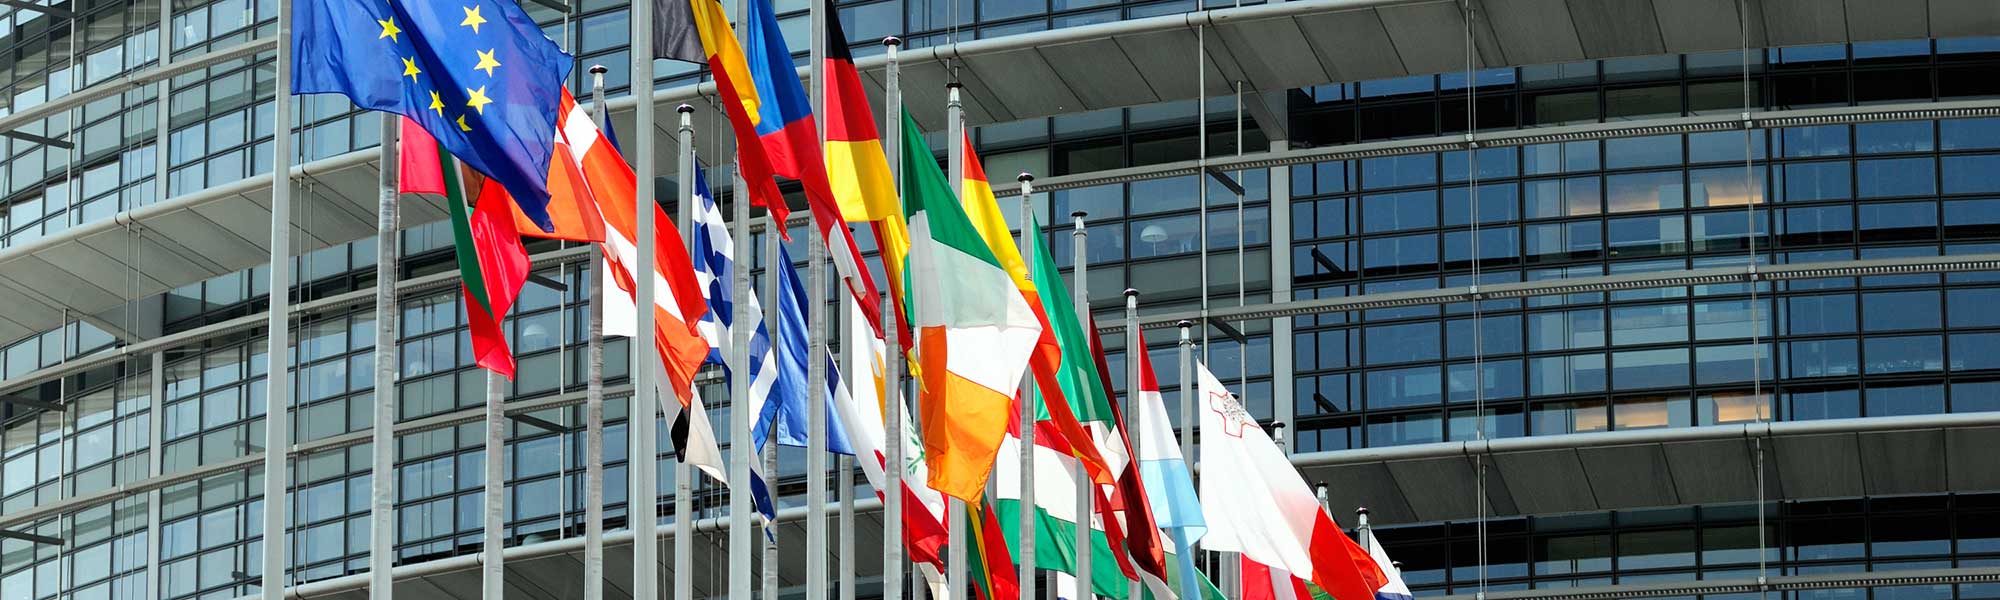 Flags of European Union countries and EU flag